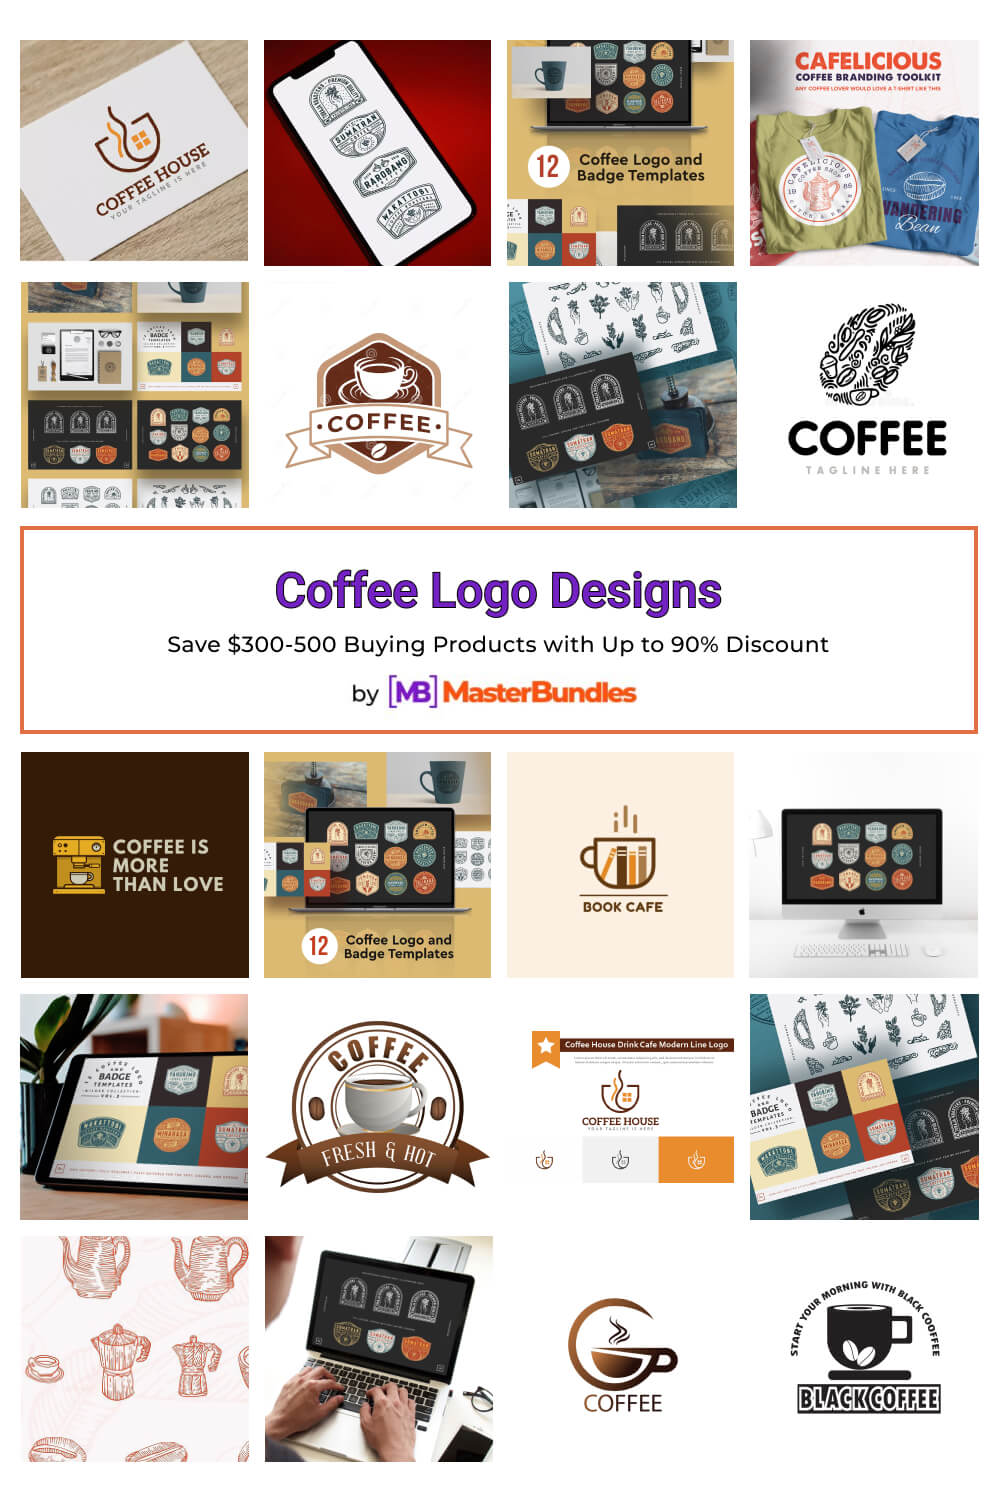 coffee logo designs pinterest image.